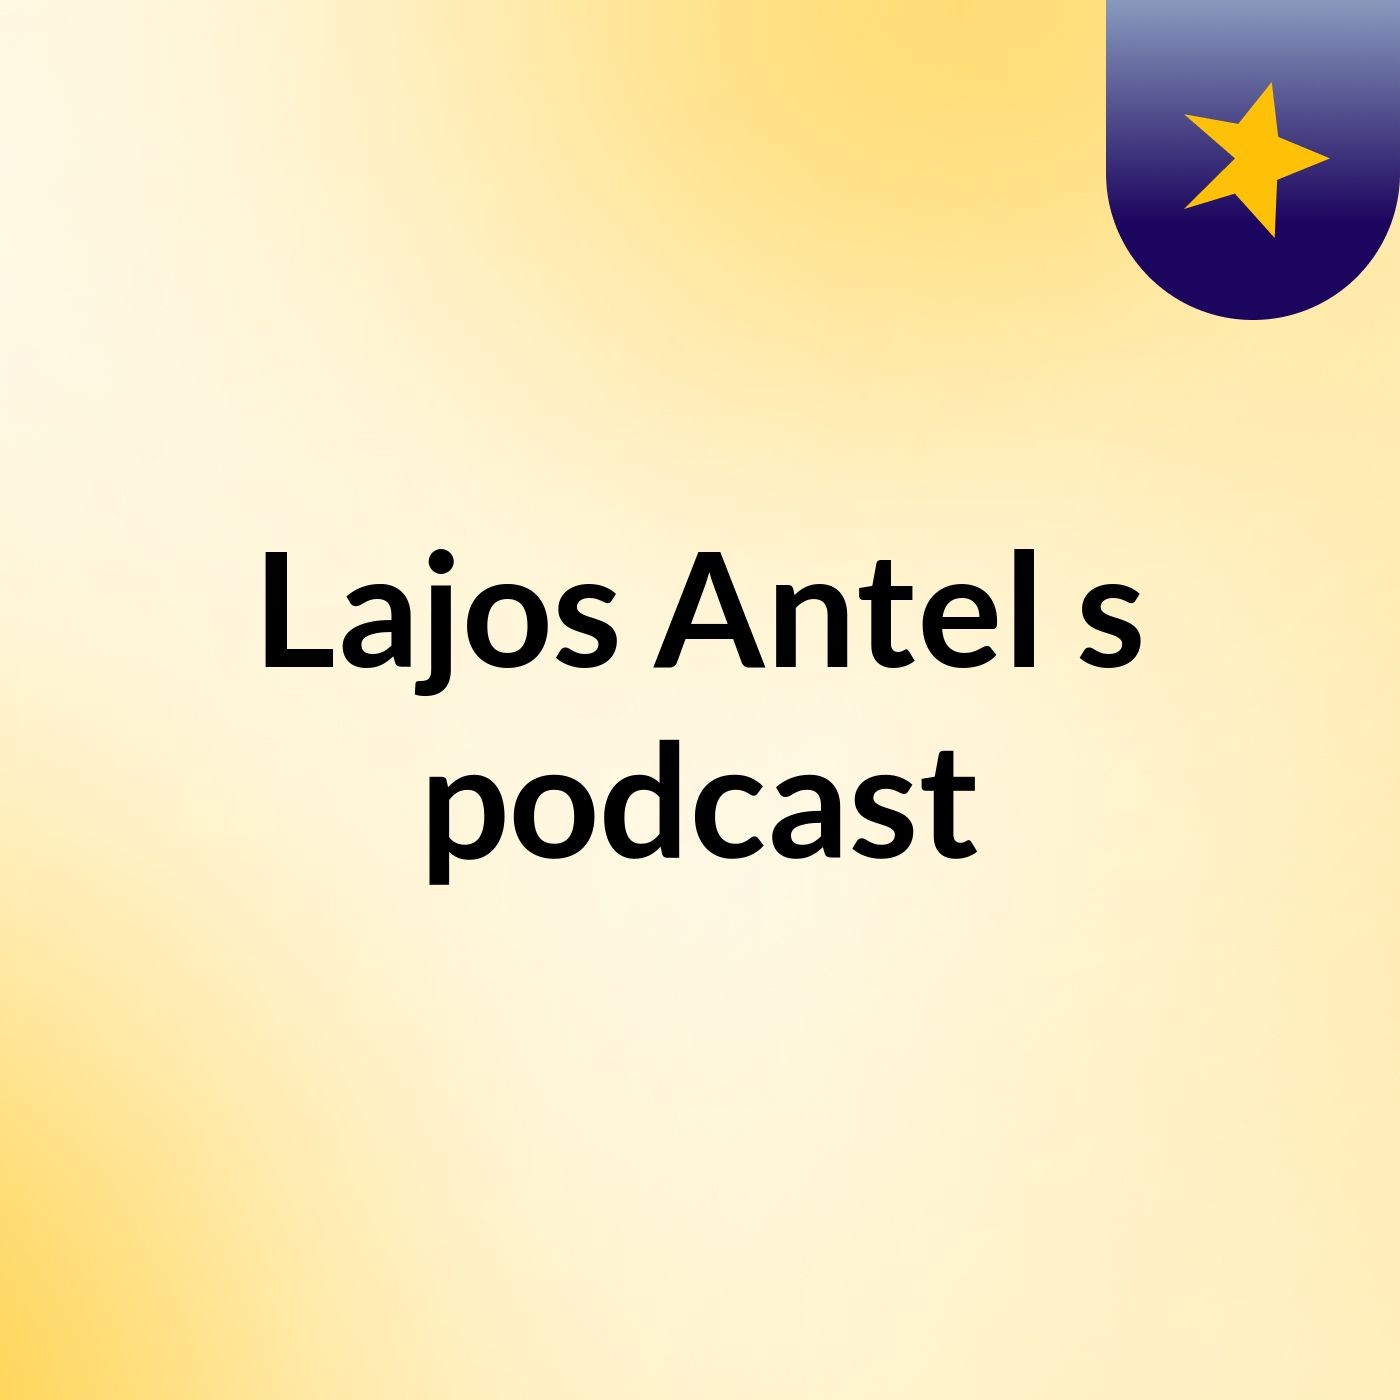 Lajos Antel's podcast